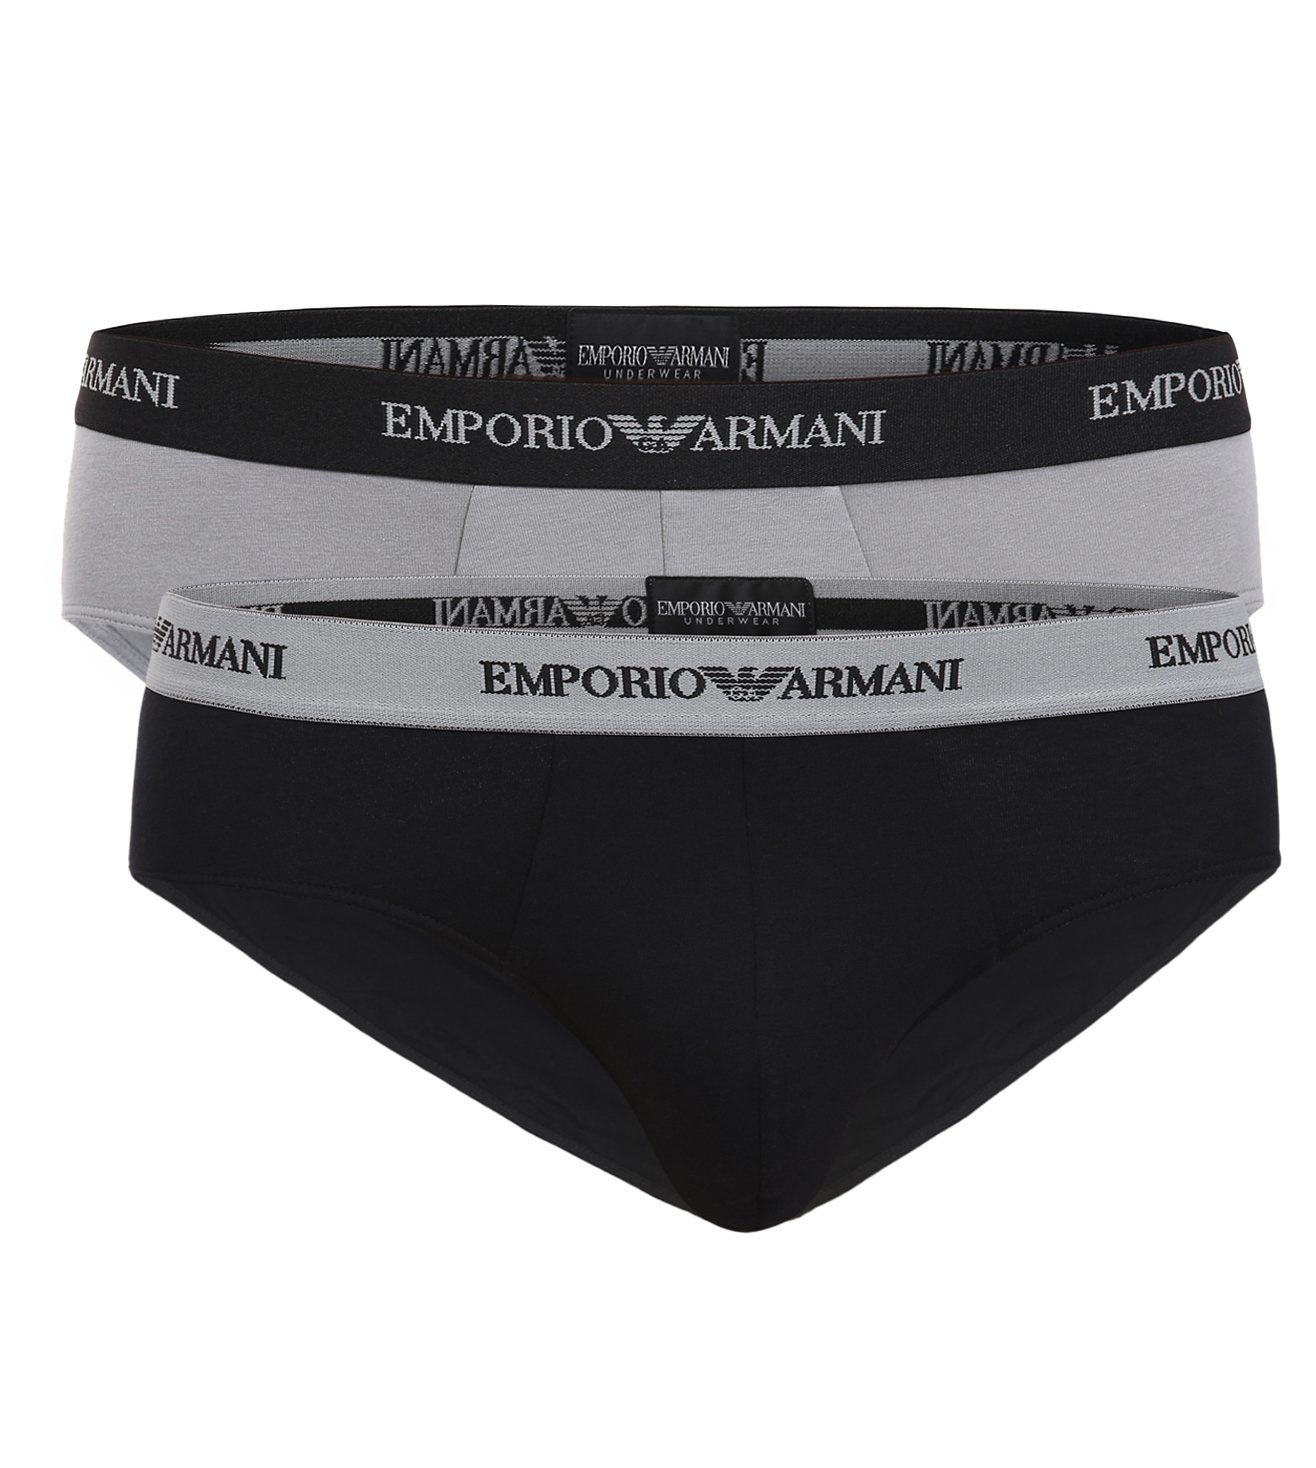 armani underwear price